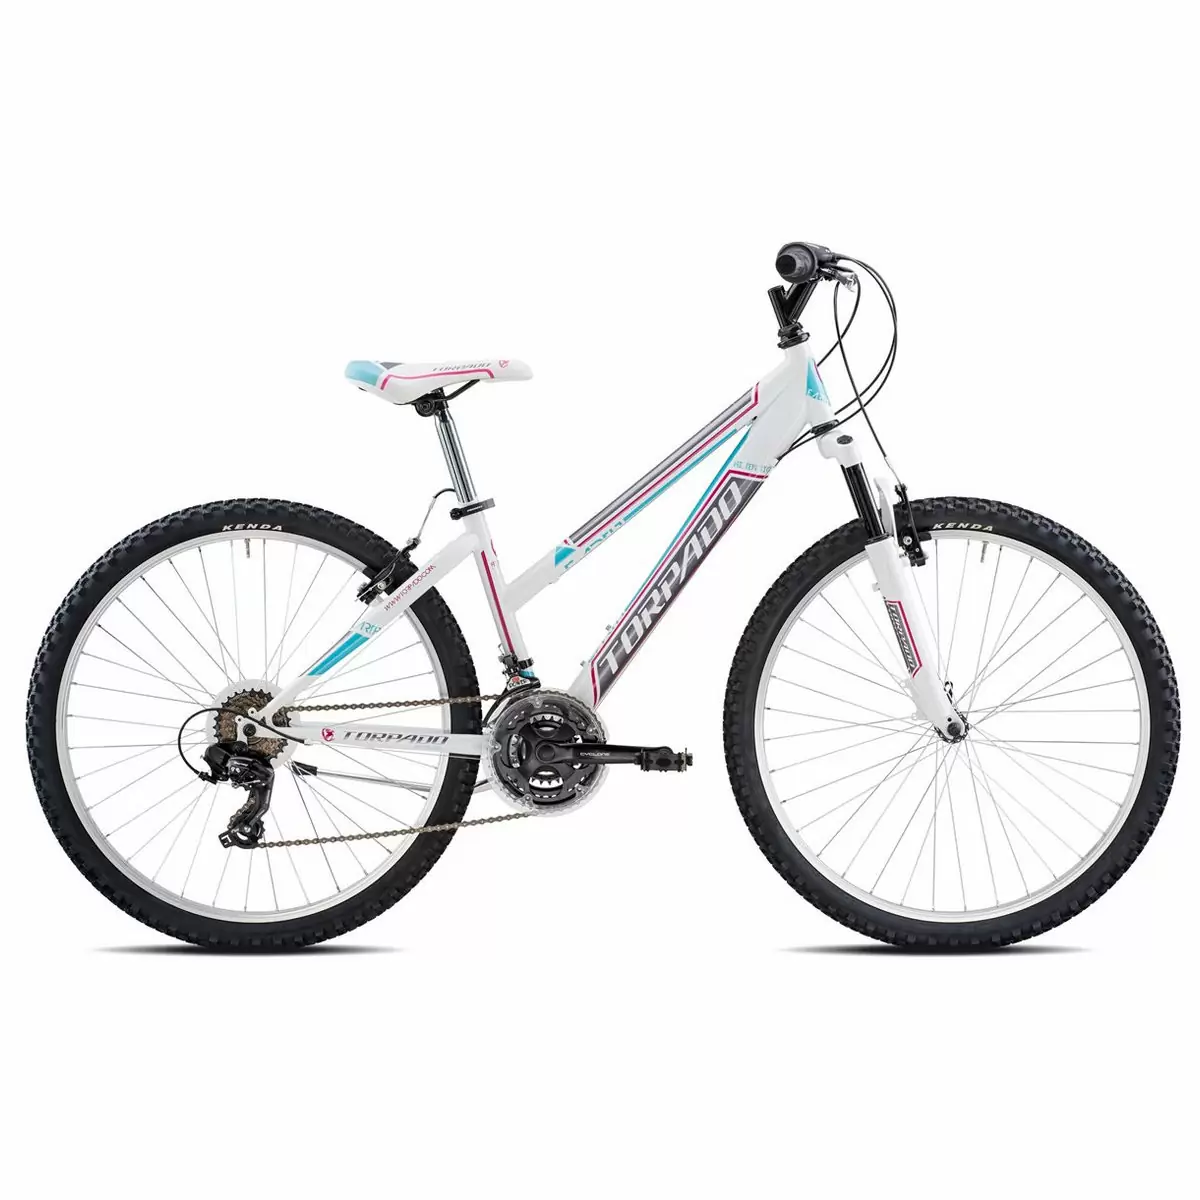 Bicicleta mtb feminina T596 earth 26'' 3x7v tamanho 38 branco azul claro - image